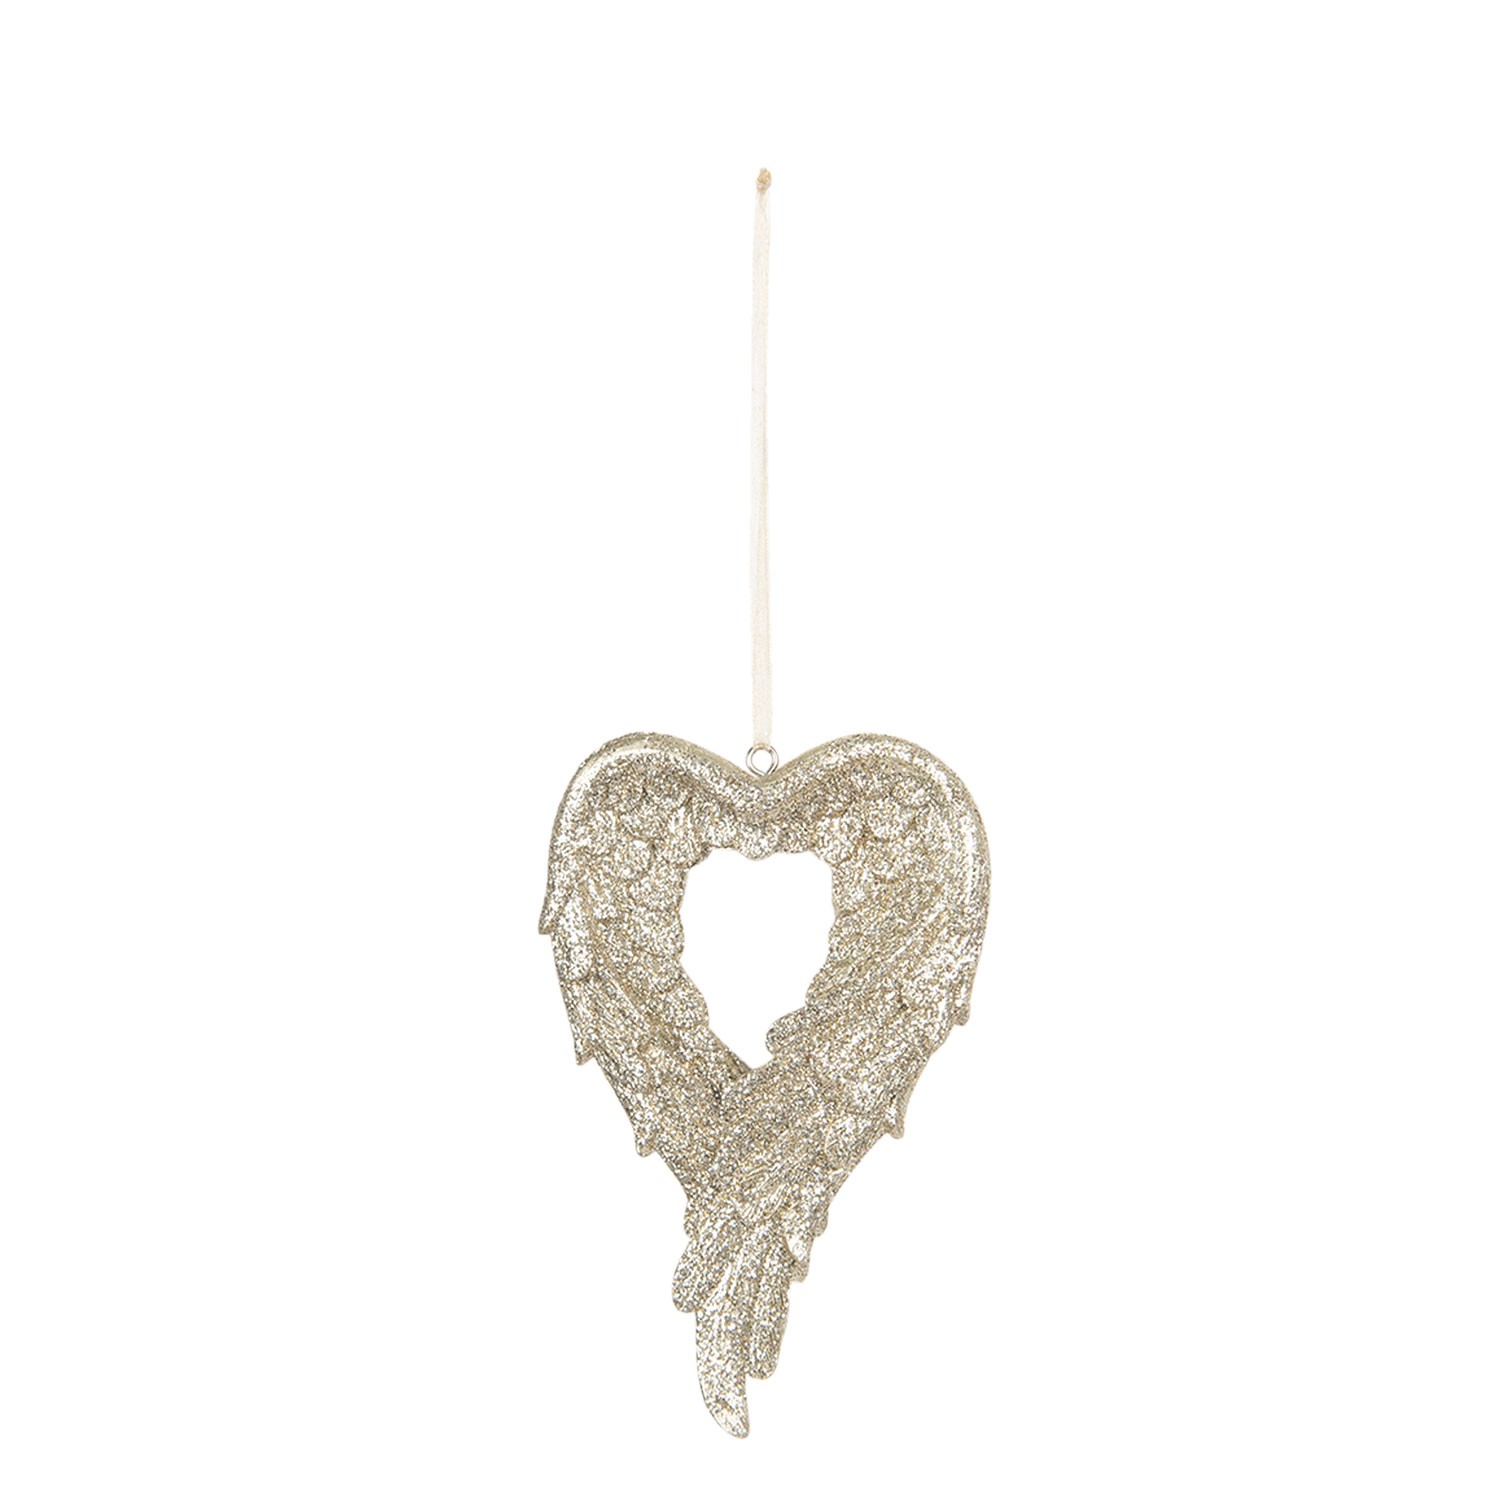 Zlatá dekorace andělská křídla ve tvaru srdce - 7*1*12 cm 6PR3032